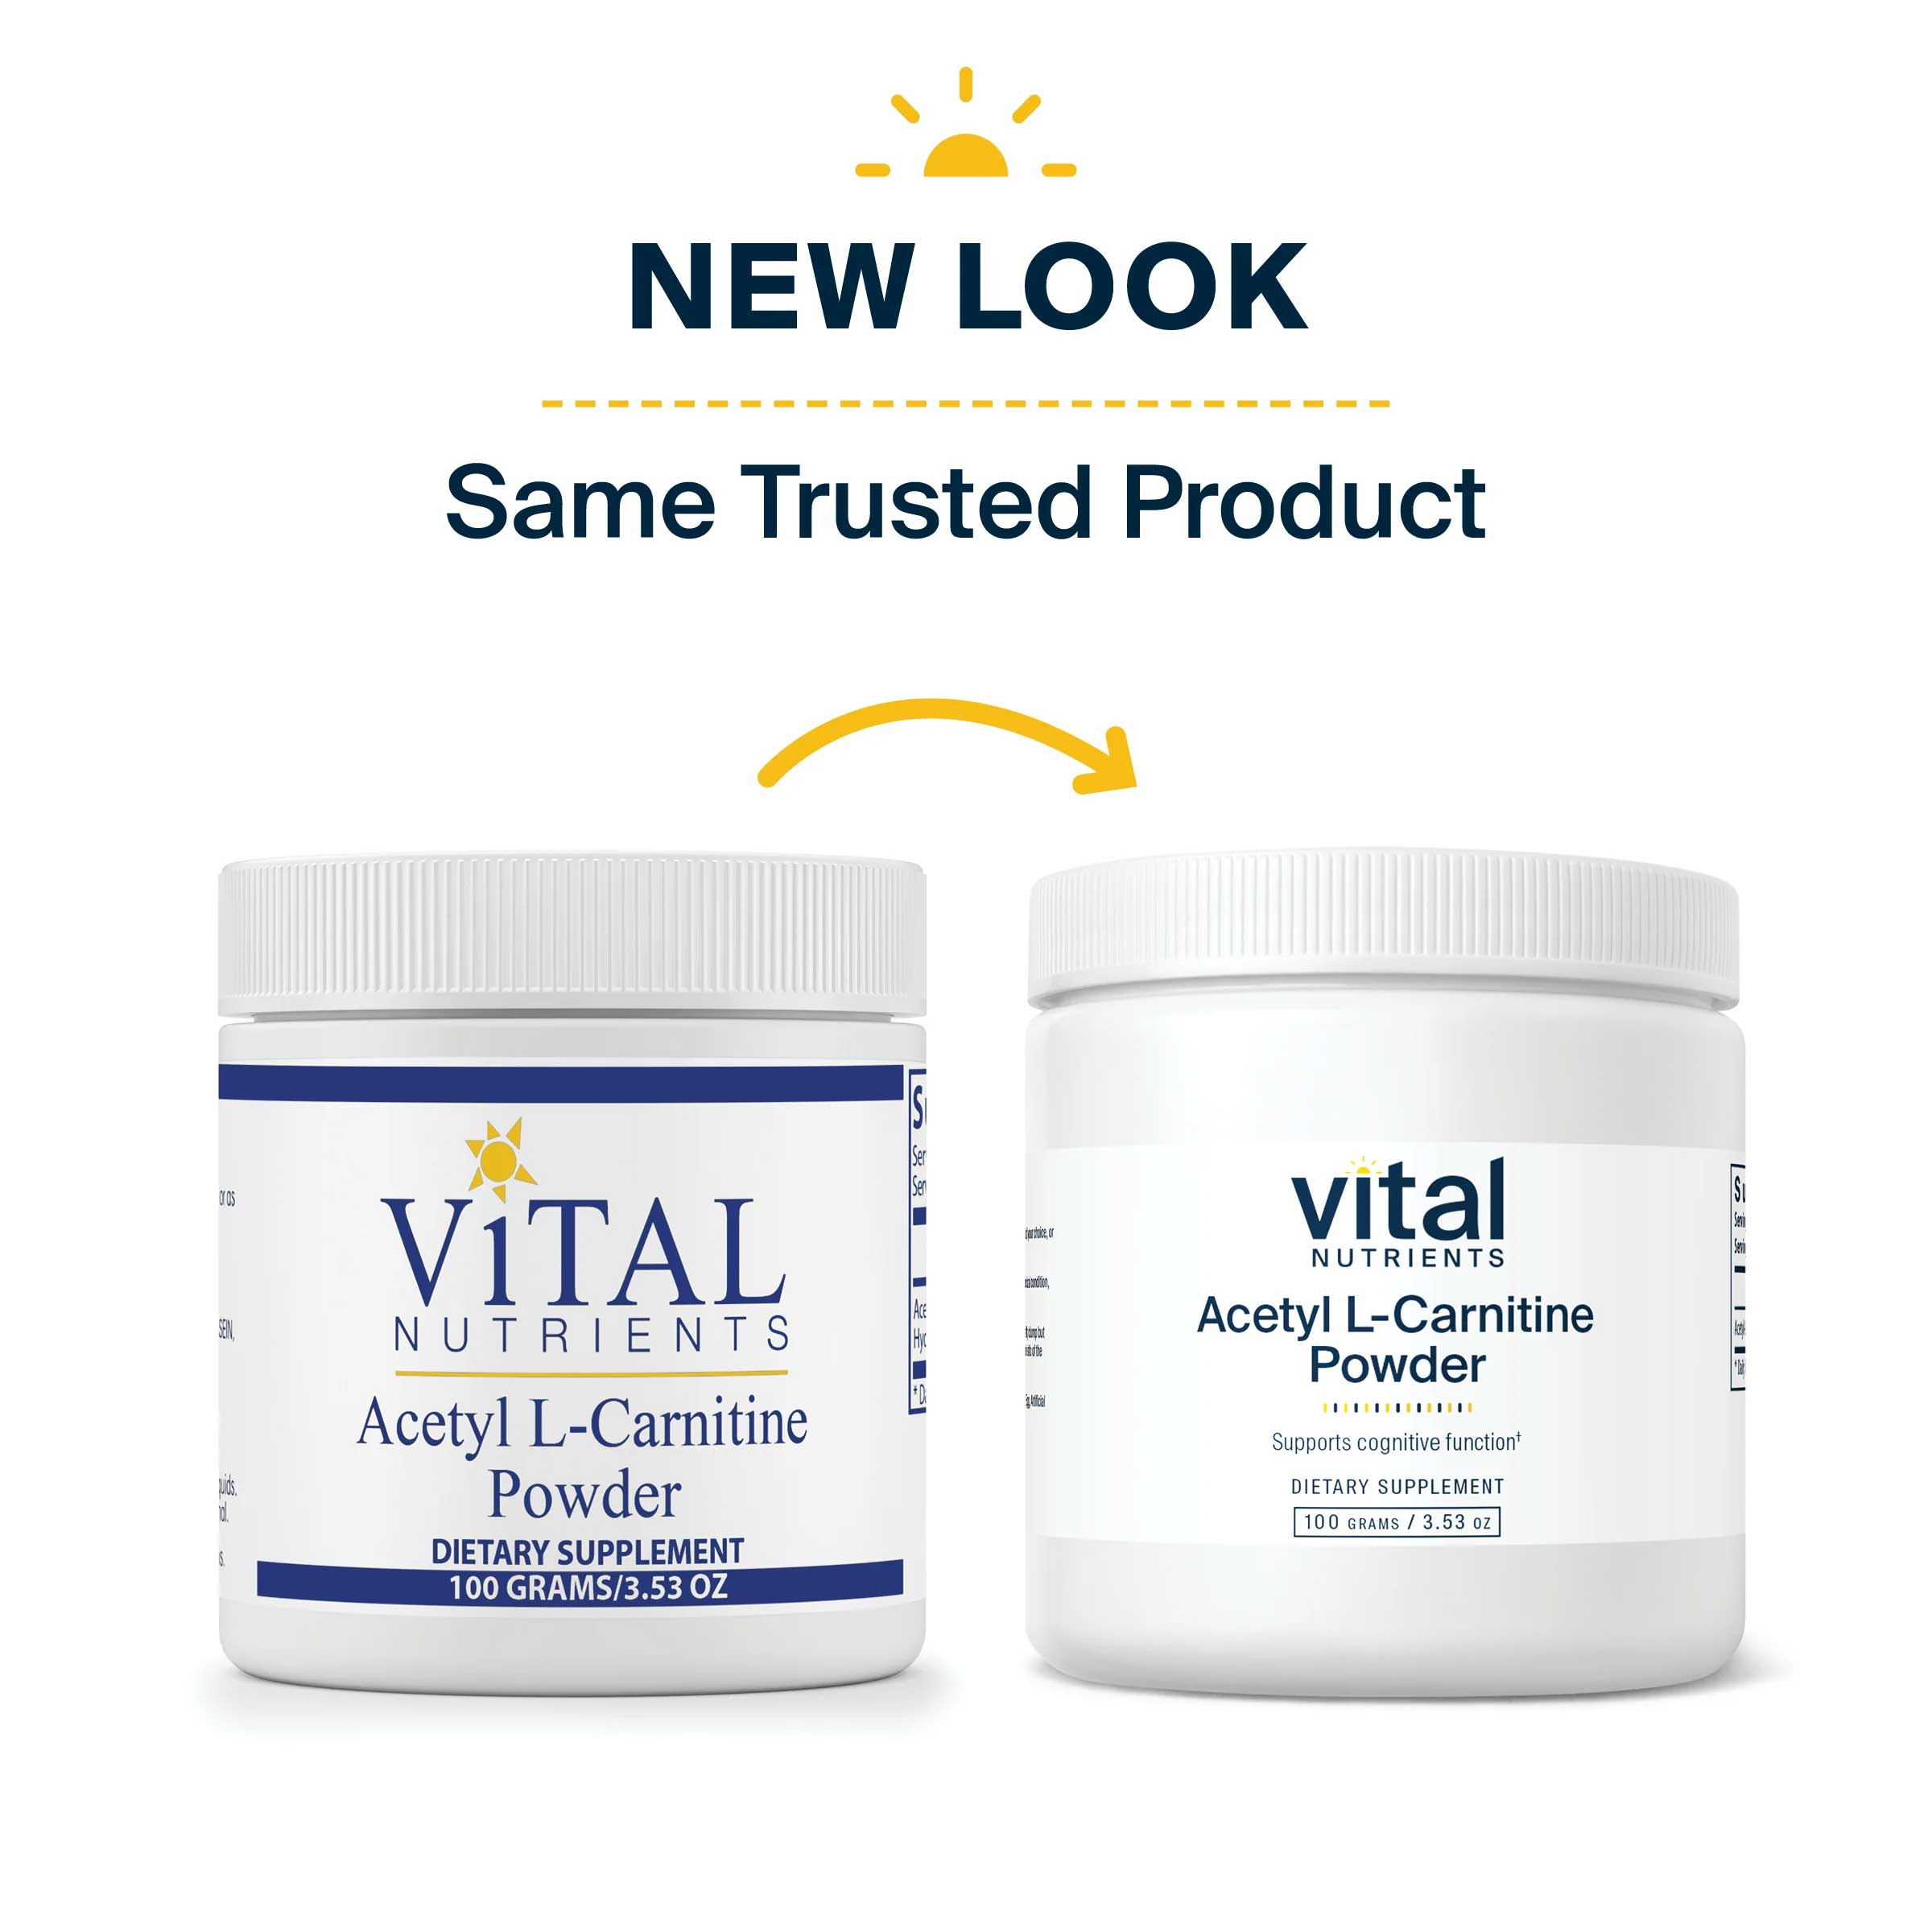 Vital Nutrients Acetyl L-Carnitine Powder New Look